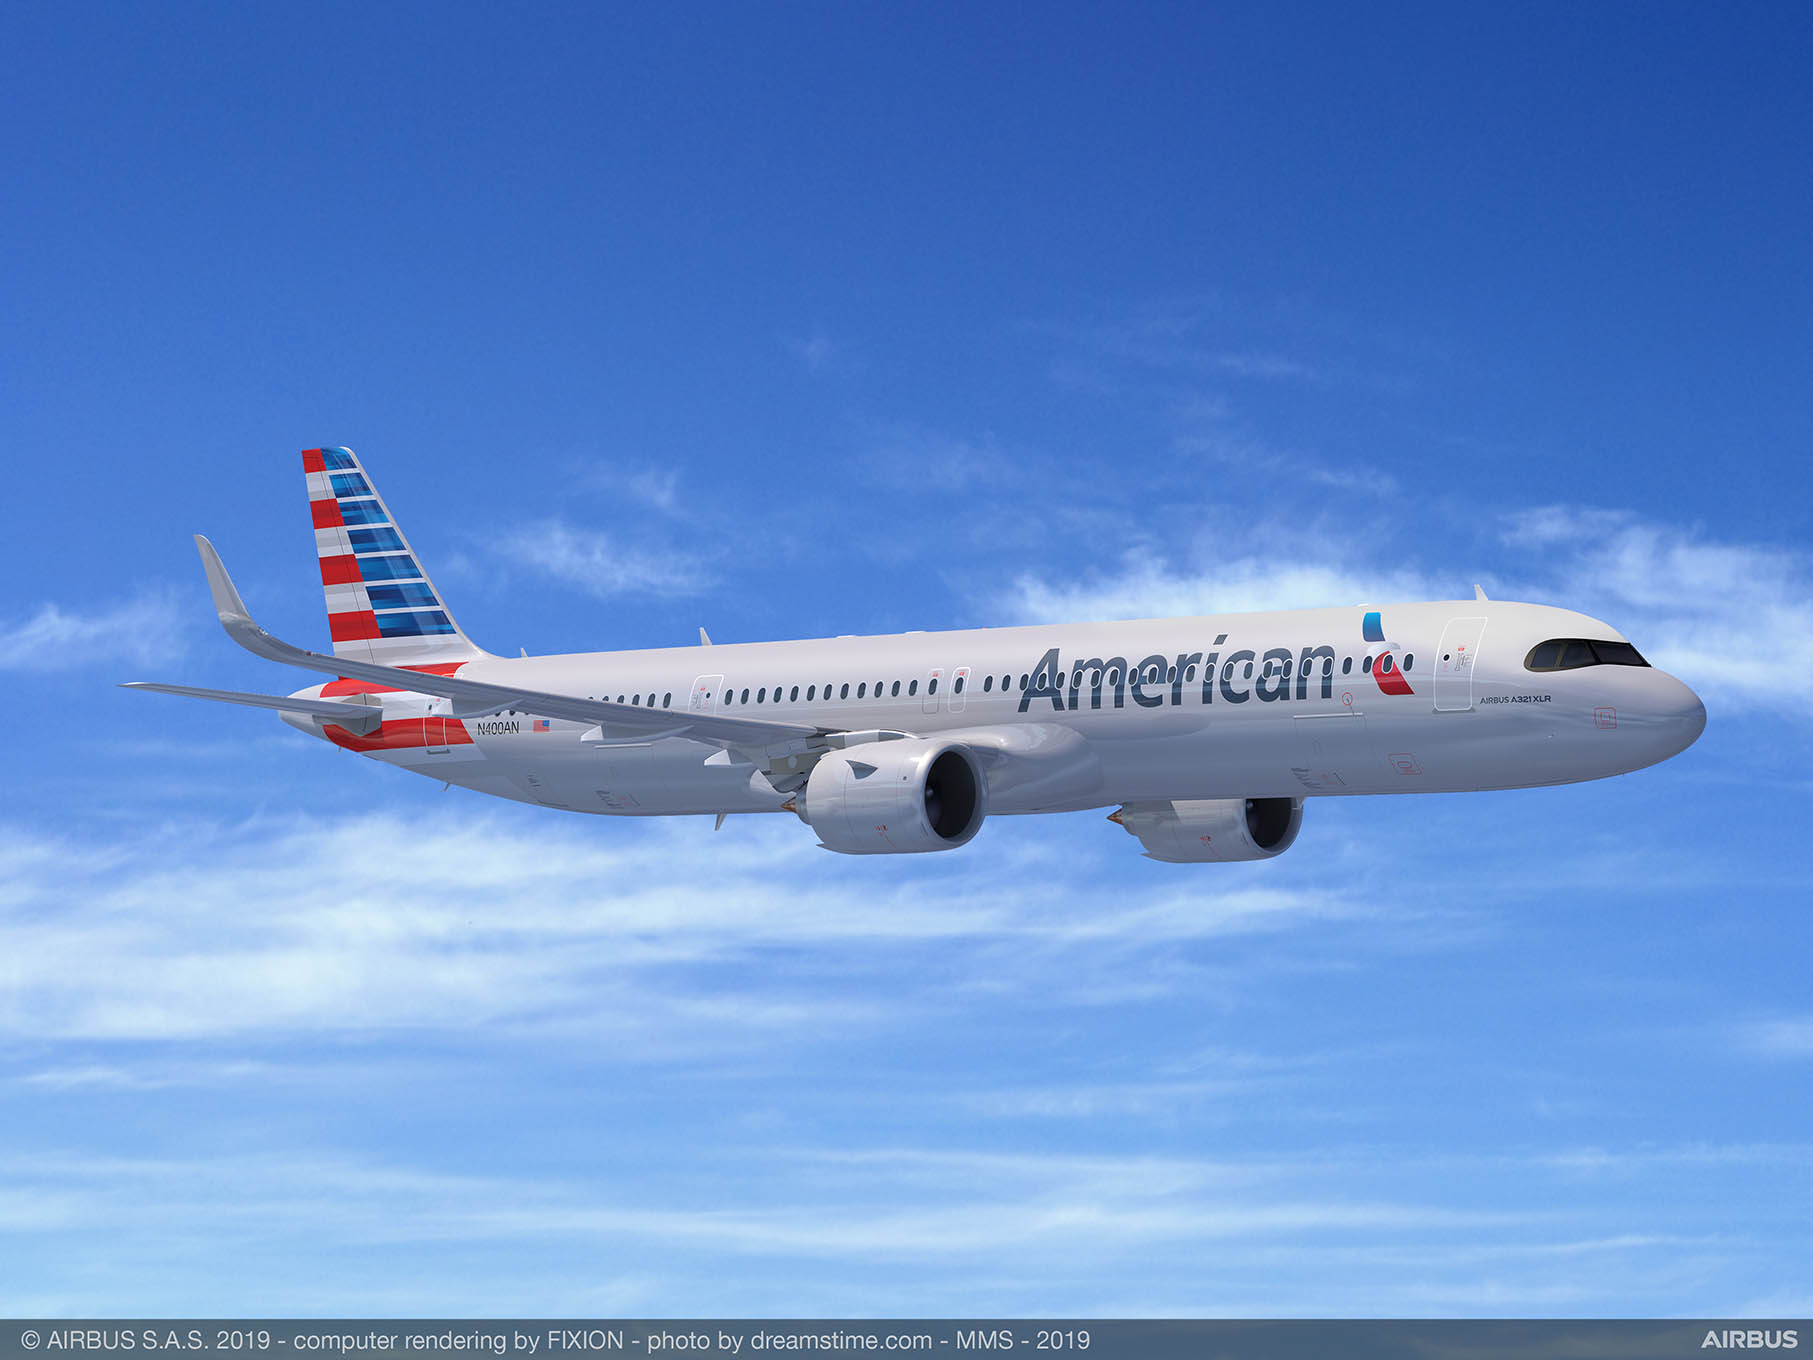 American Airlines resume LaGuardia-Boston route